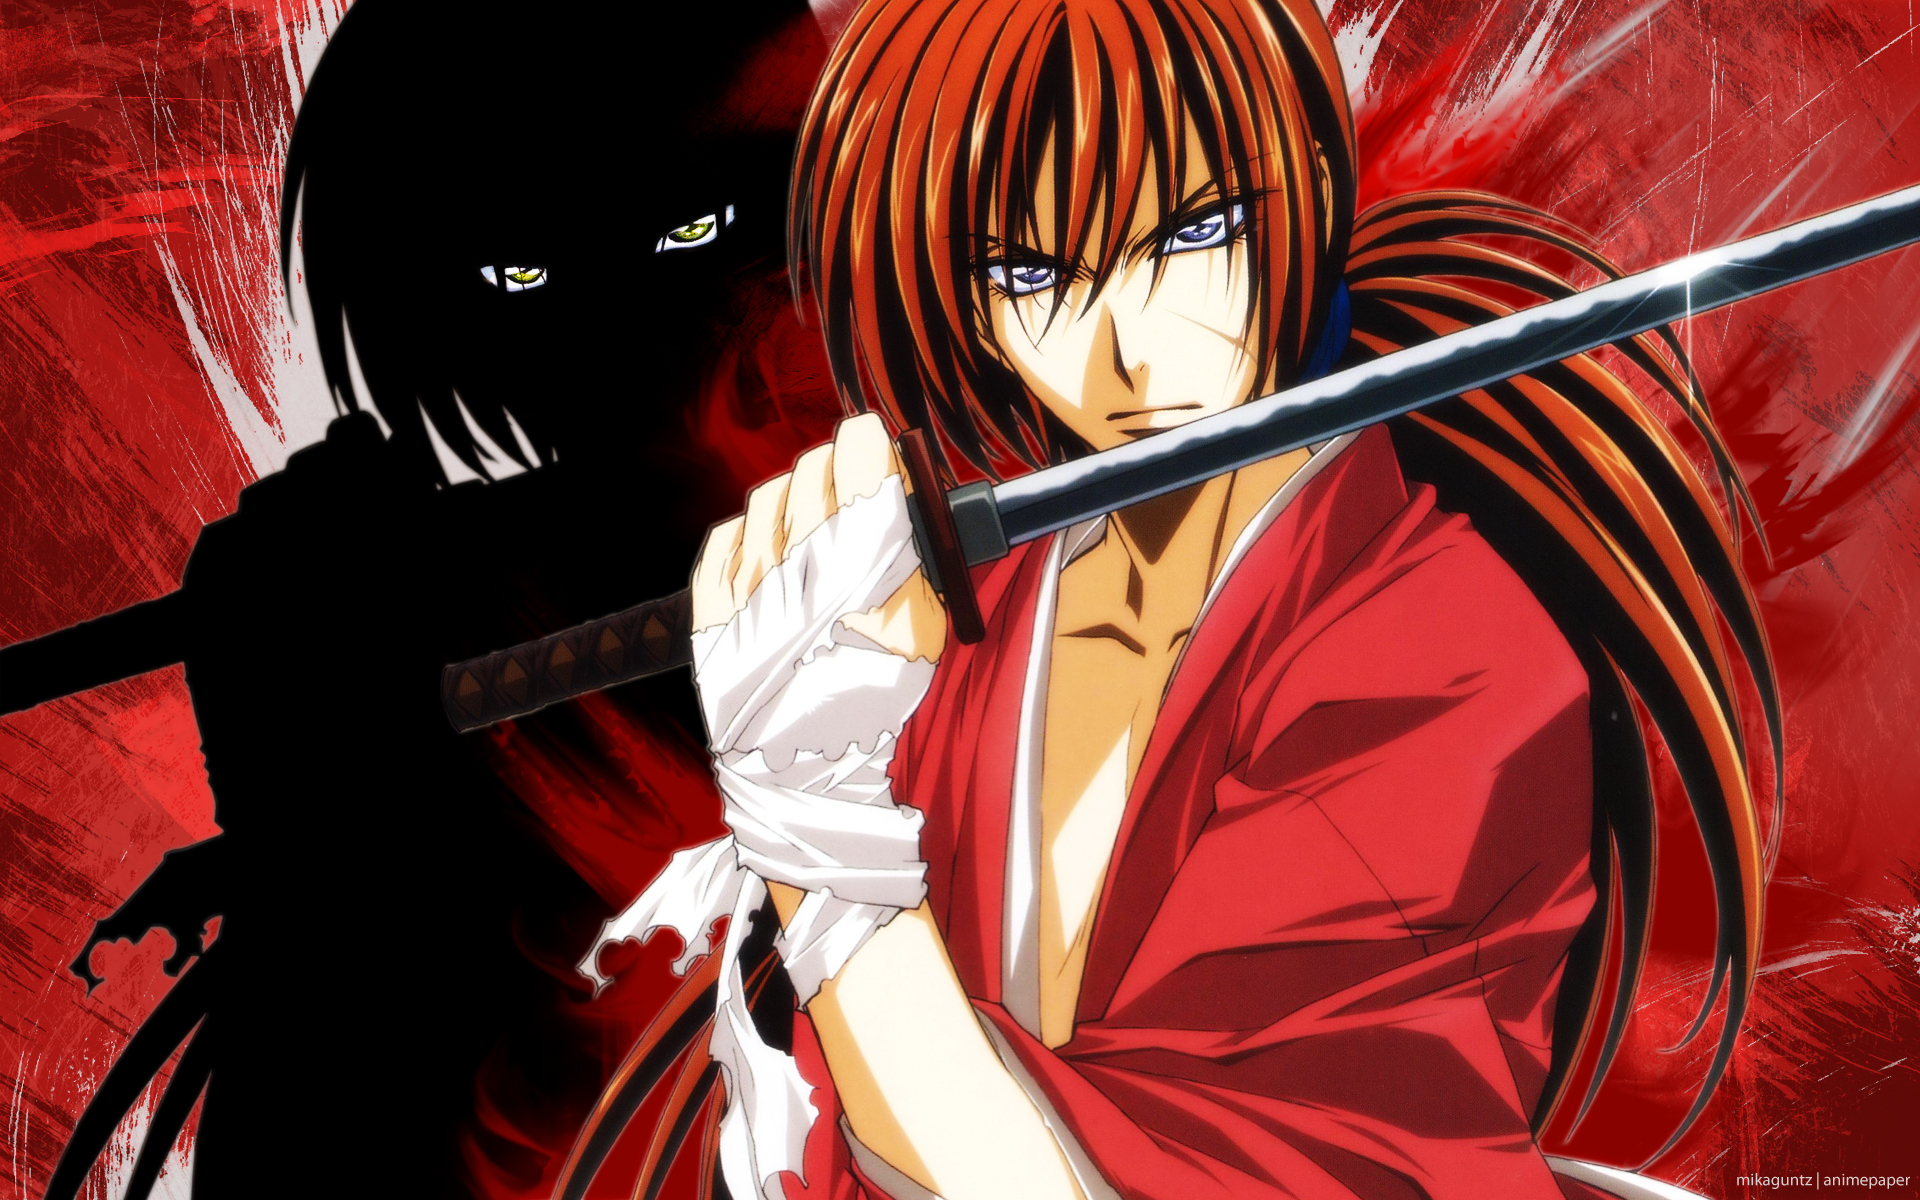  Rurouni  Kenshin  HD Wallpaper  Background Image 